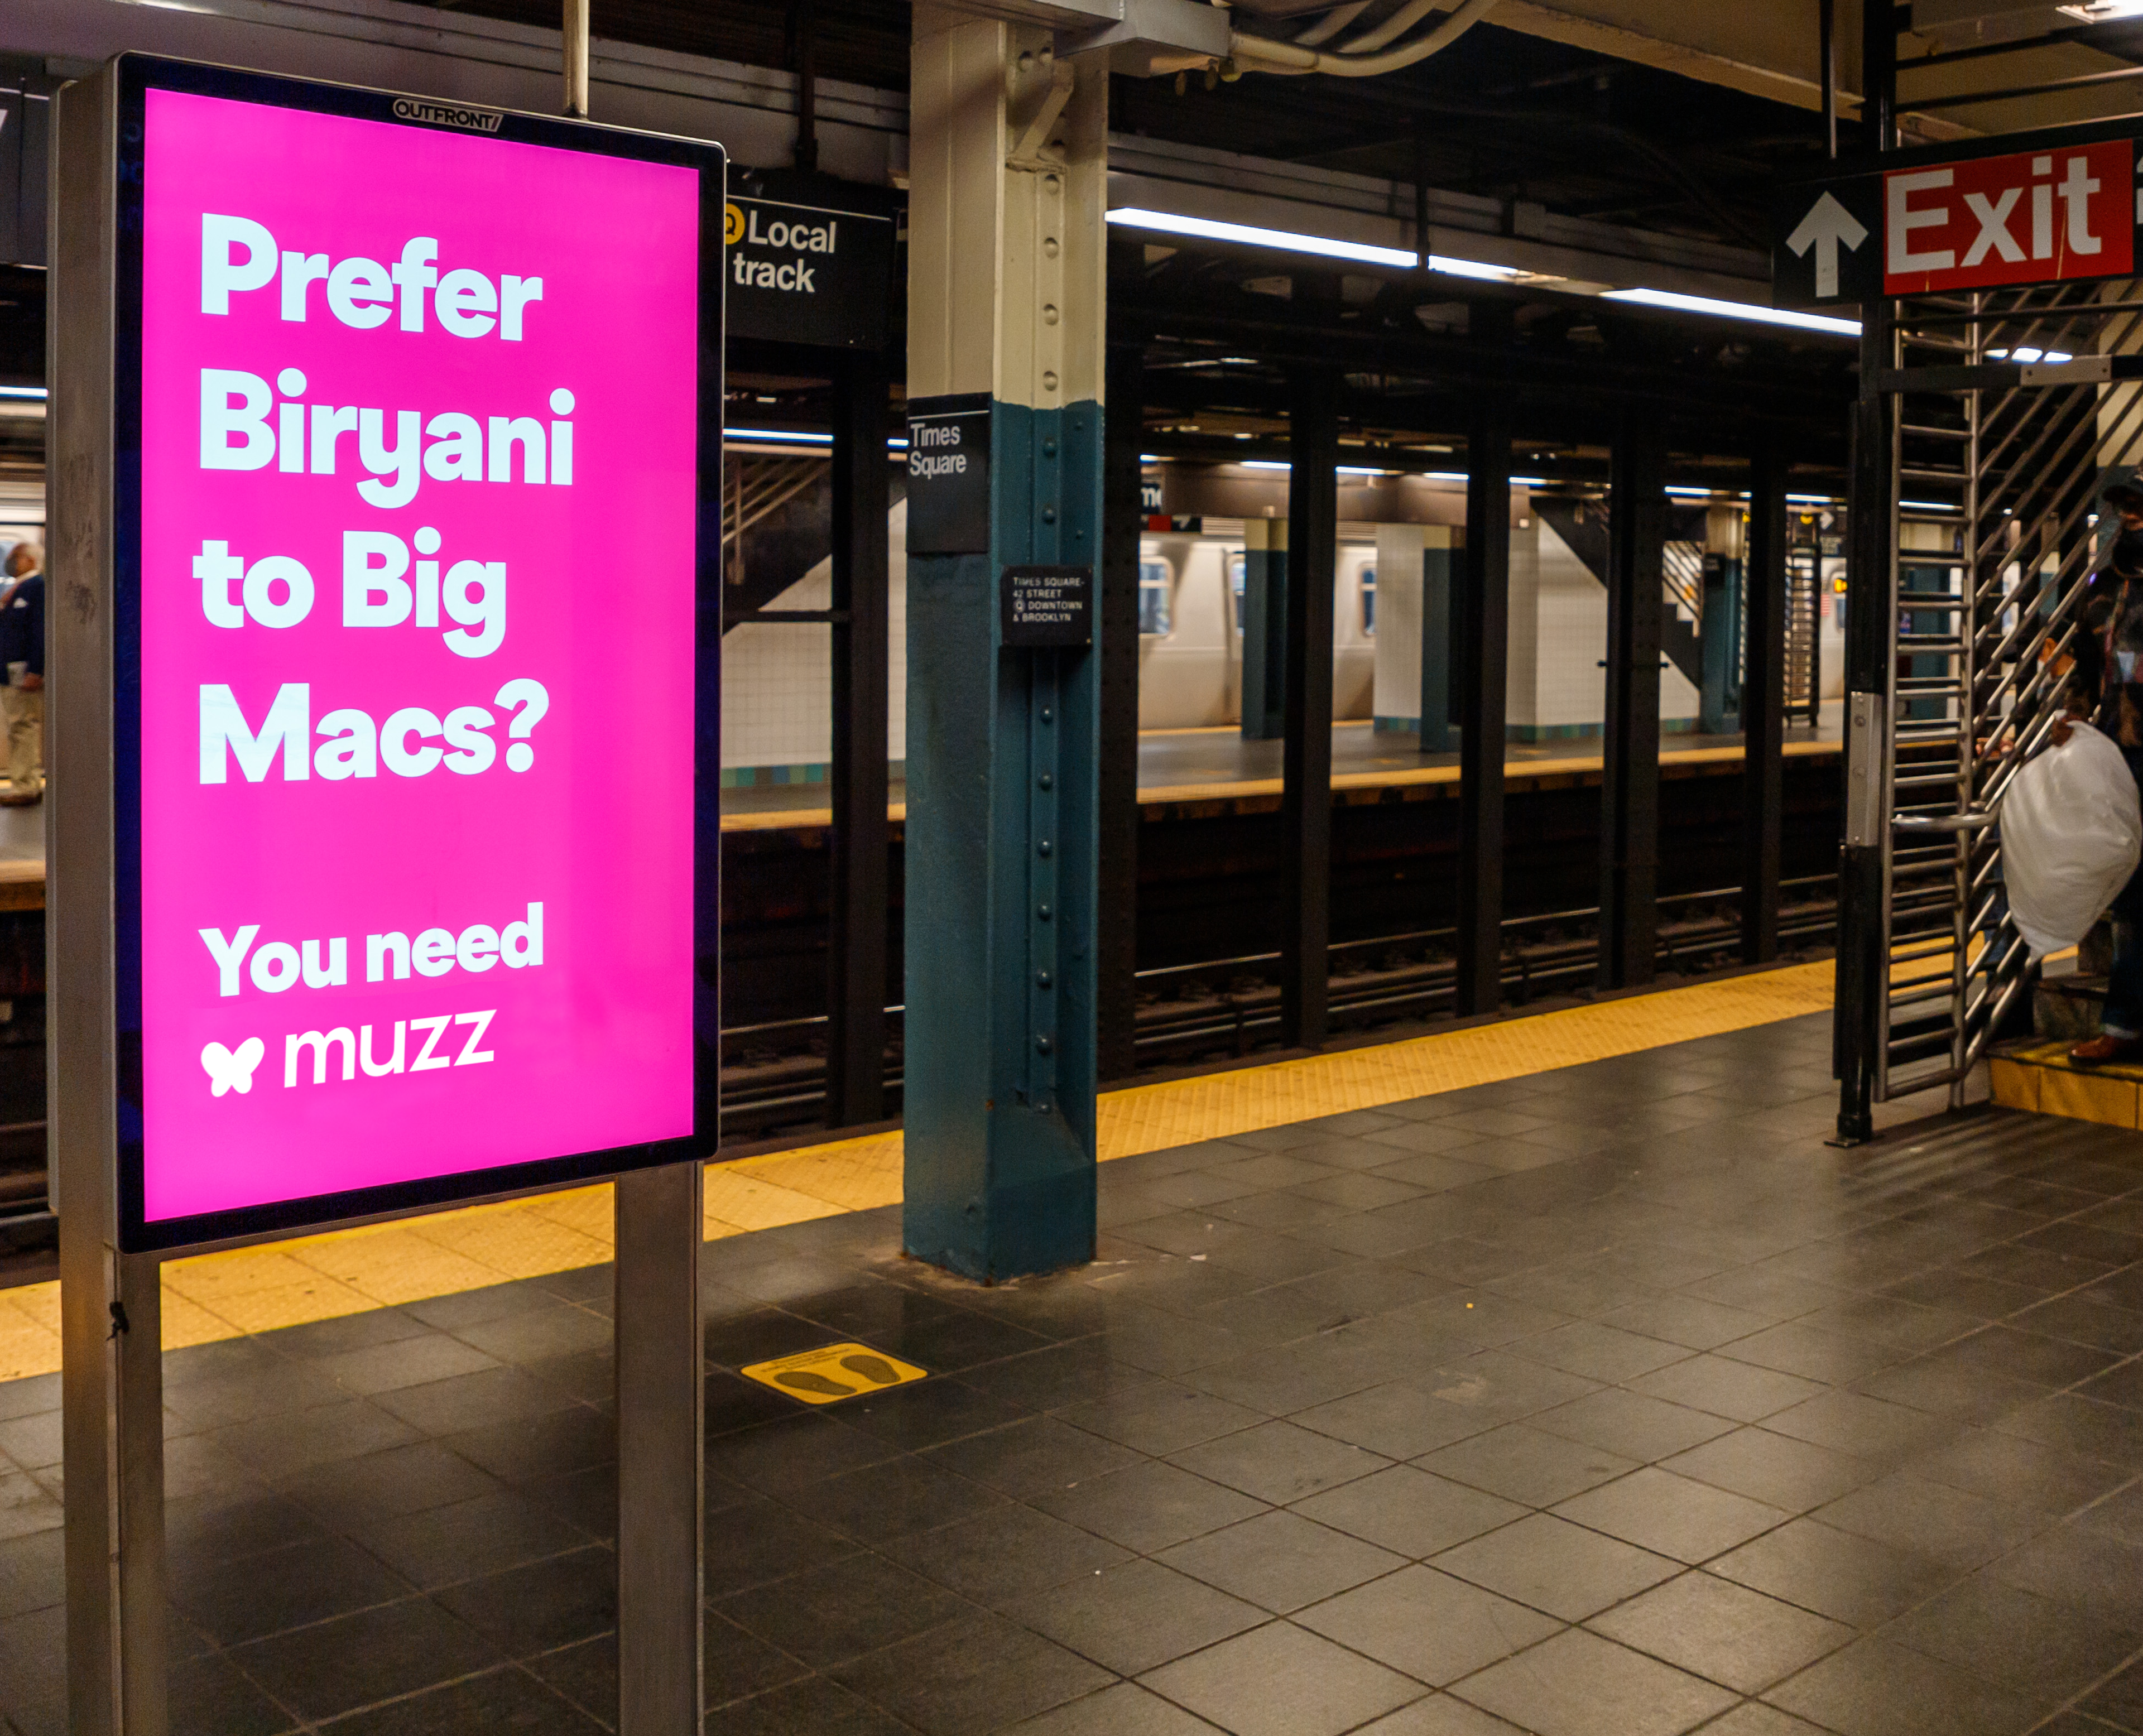 Muzz ad in subway